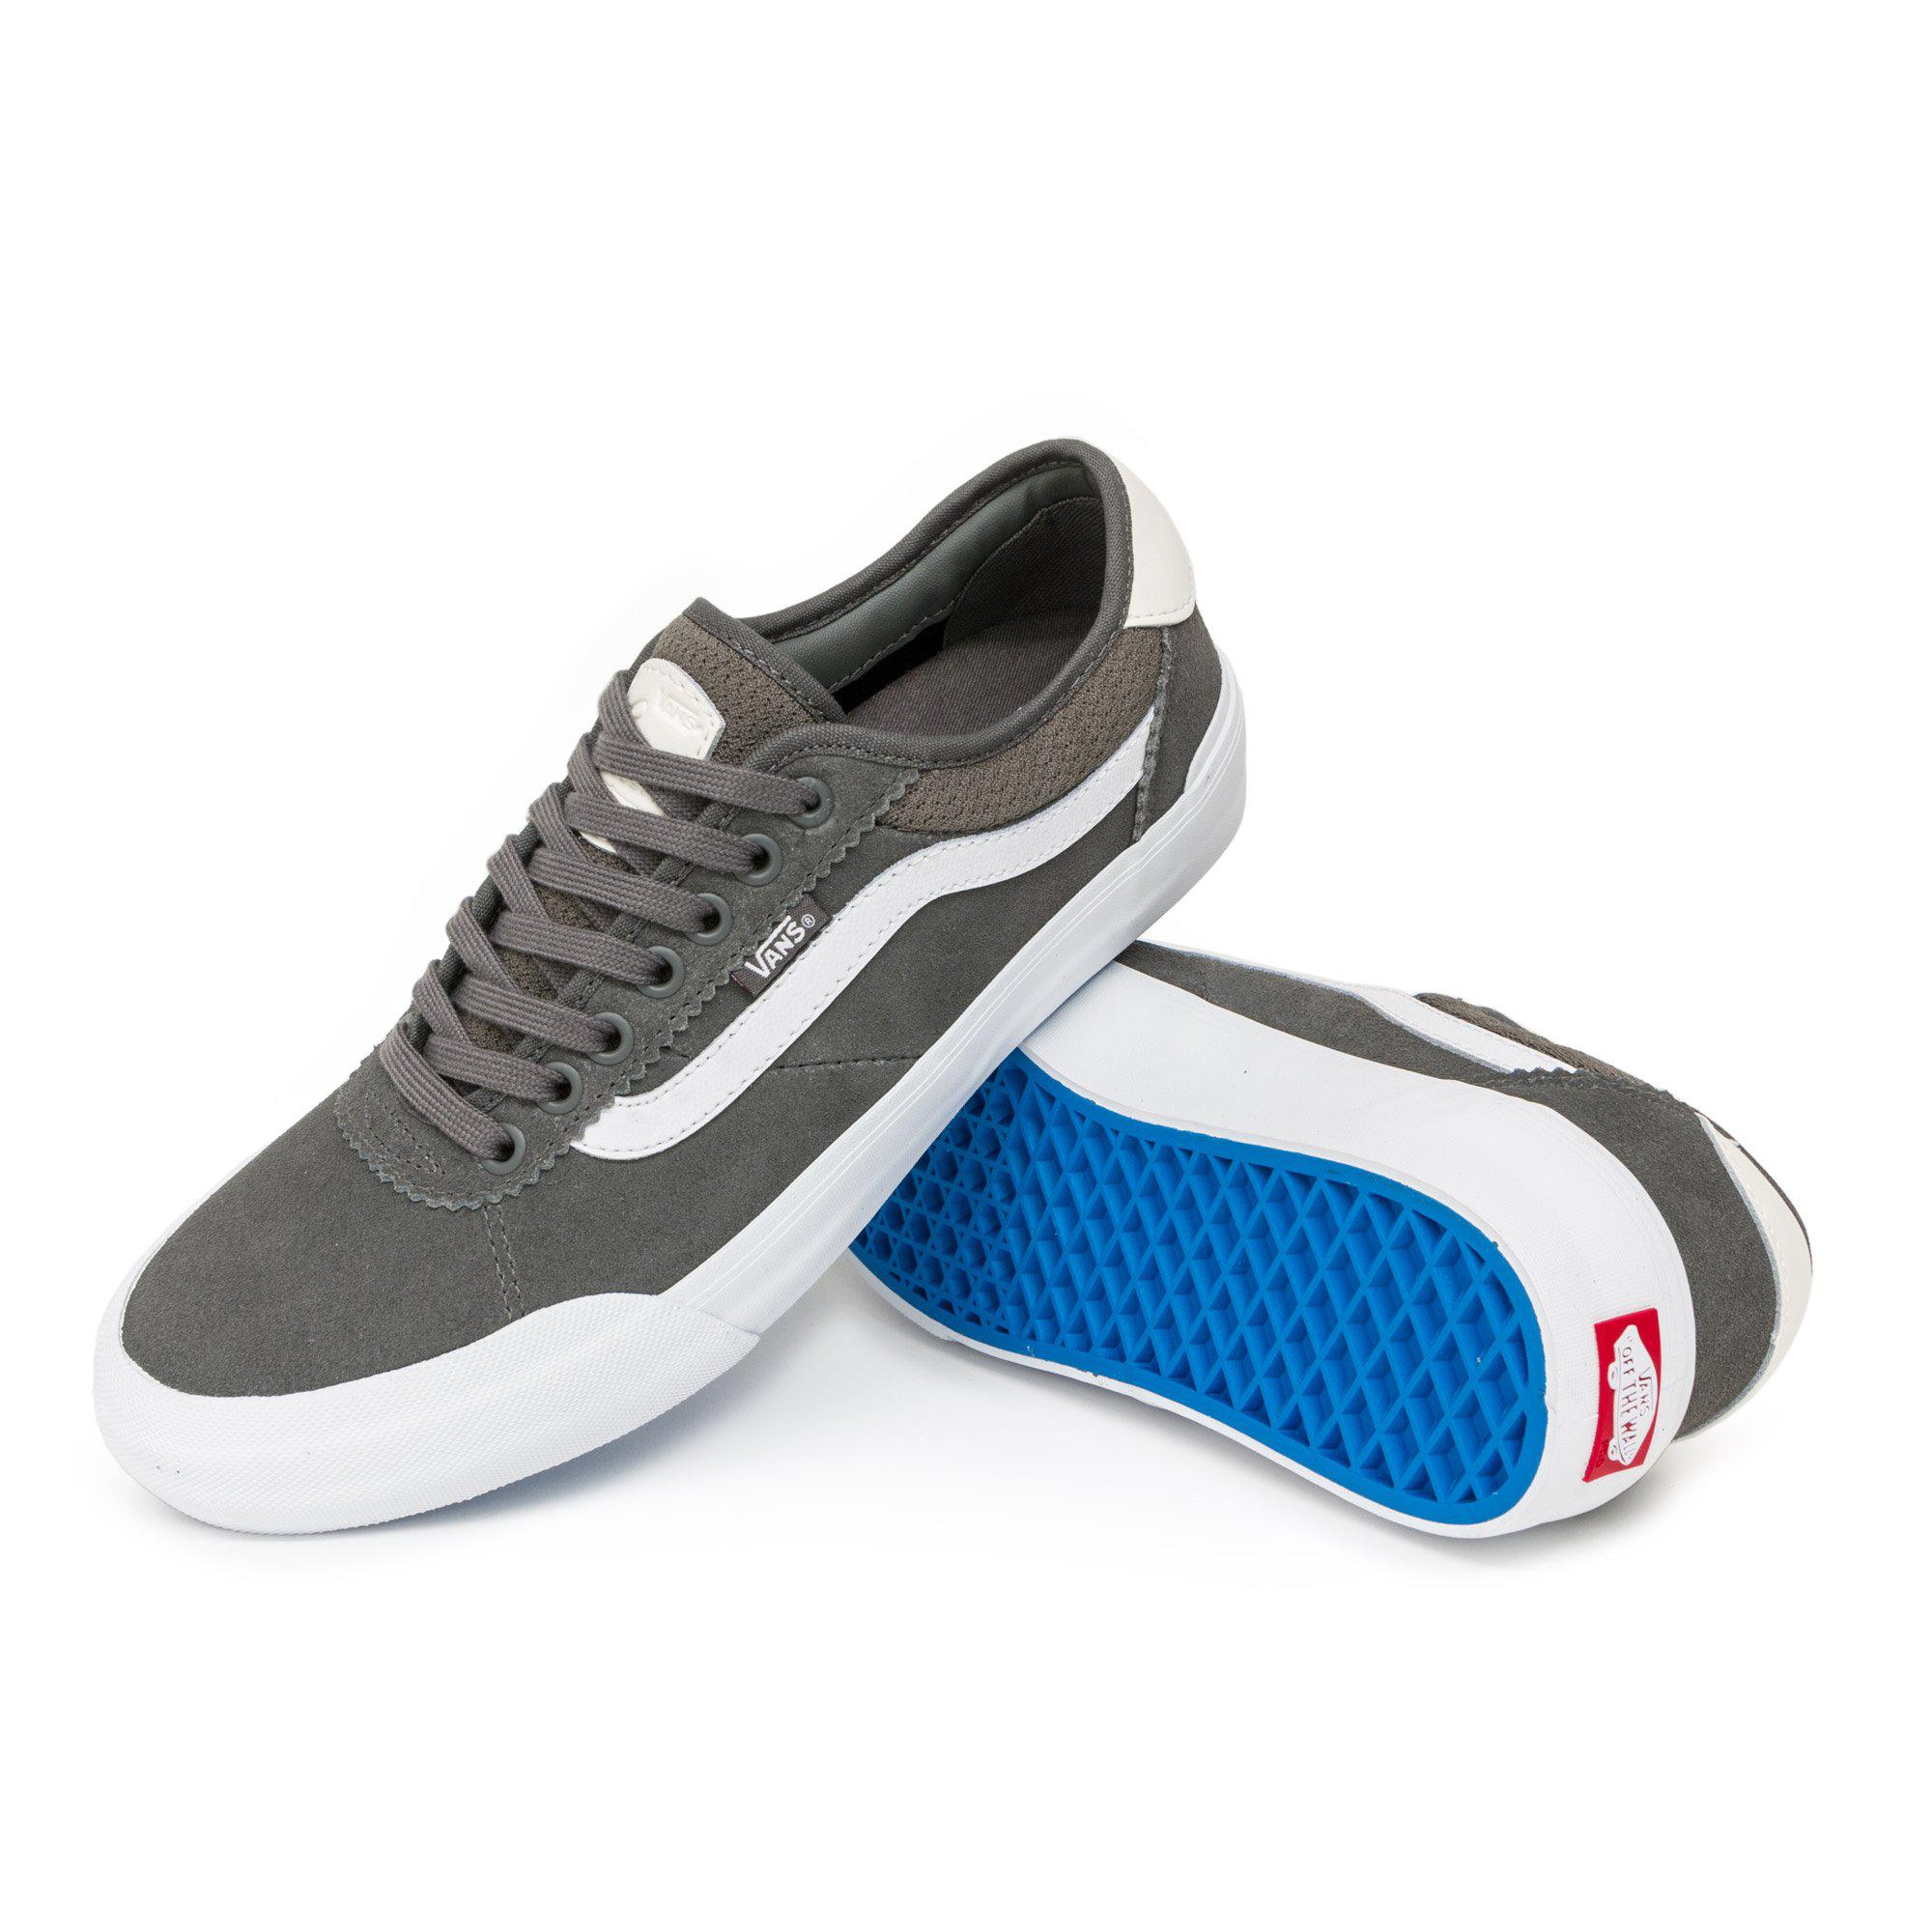 Vans Chima Pro 2 Shoes in Grey (Gray 